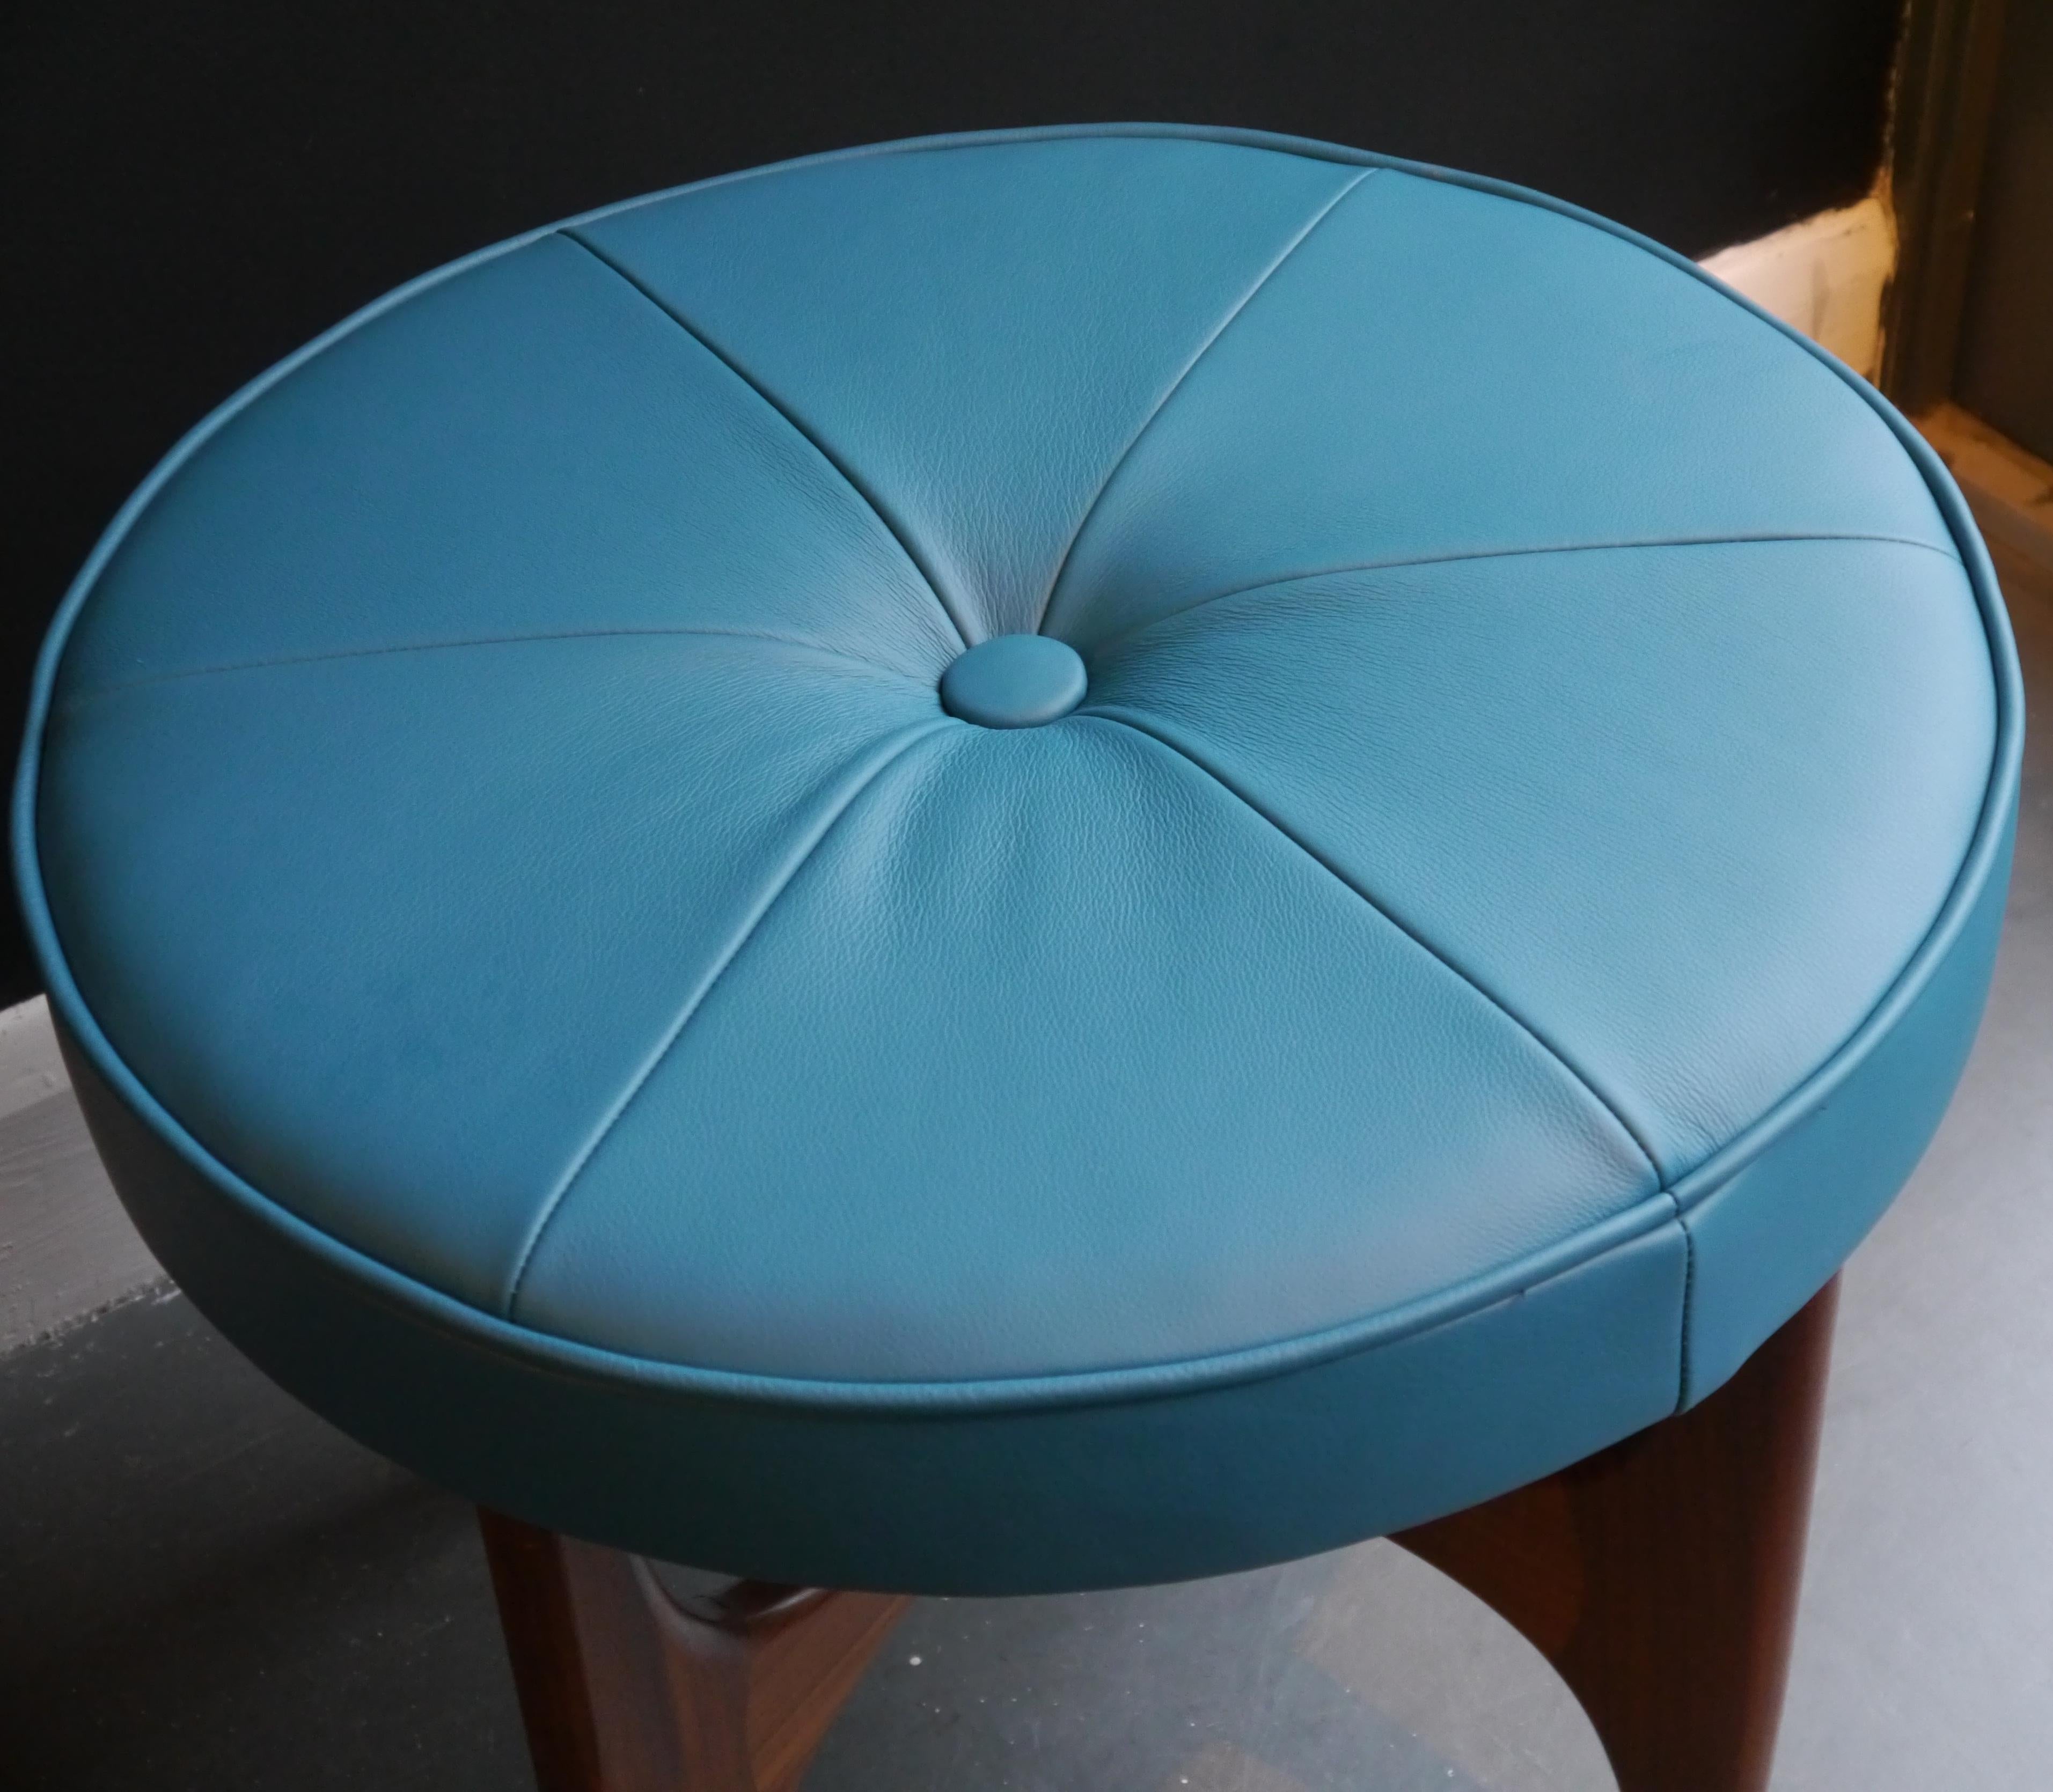 1970s English G-plan Teak based leather/cloth footstool designed by Kofod larsen For Sale 8